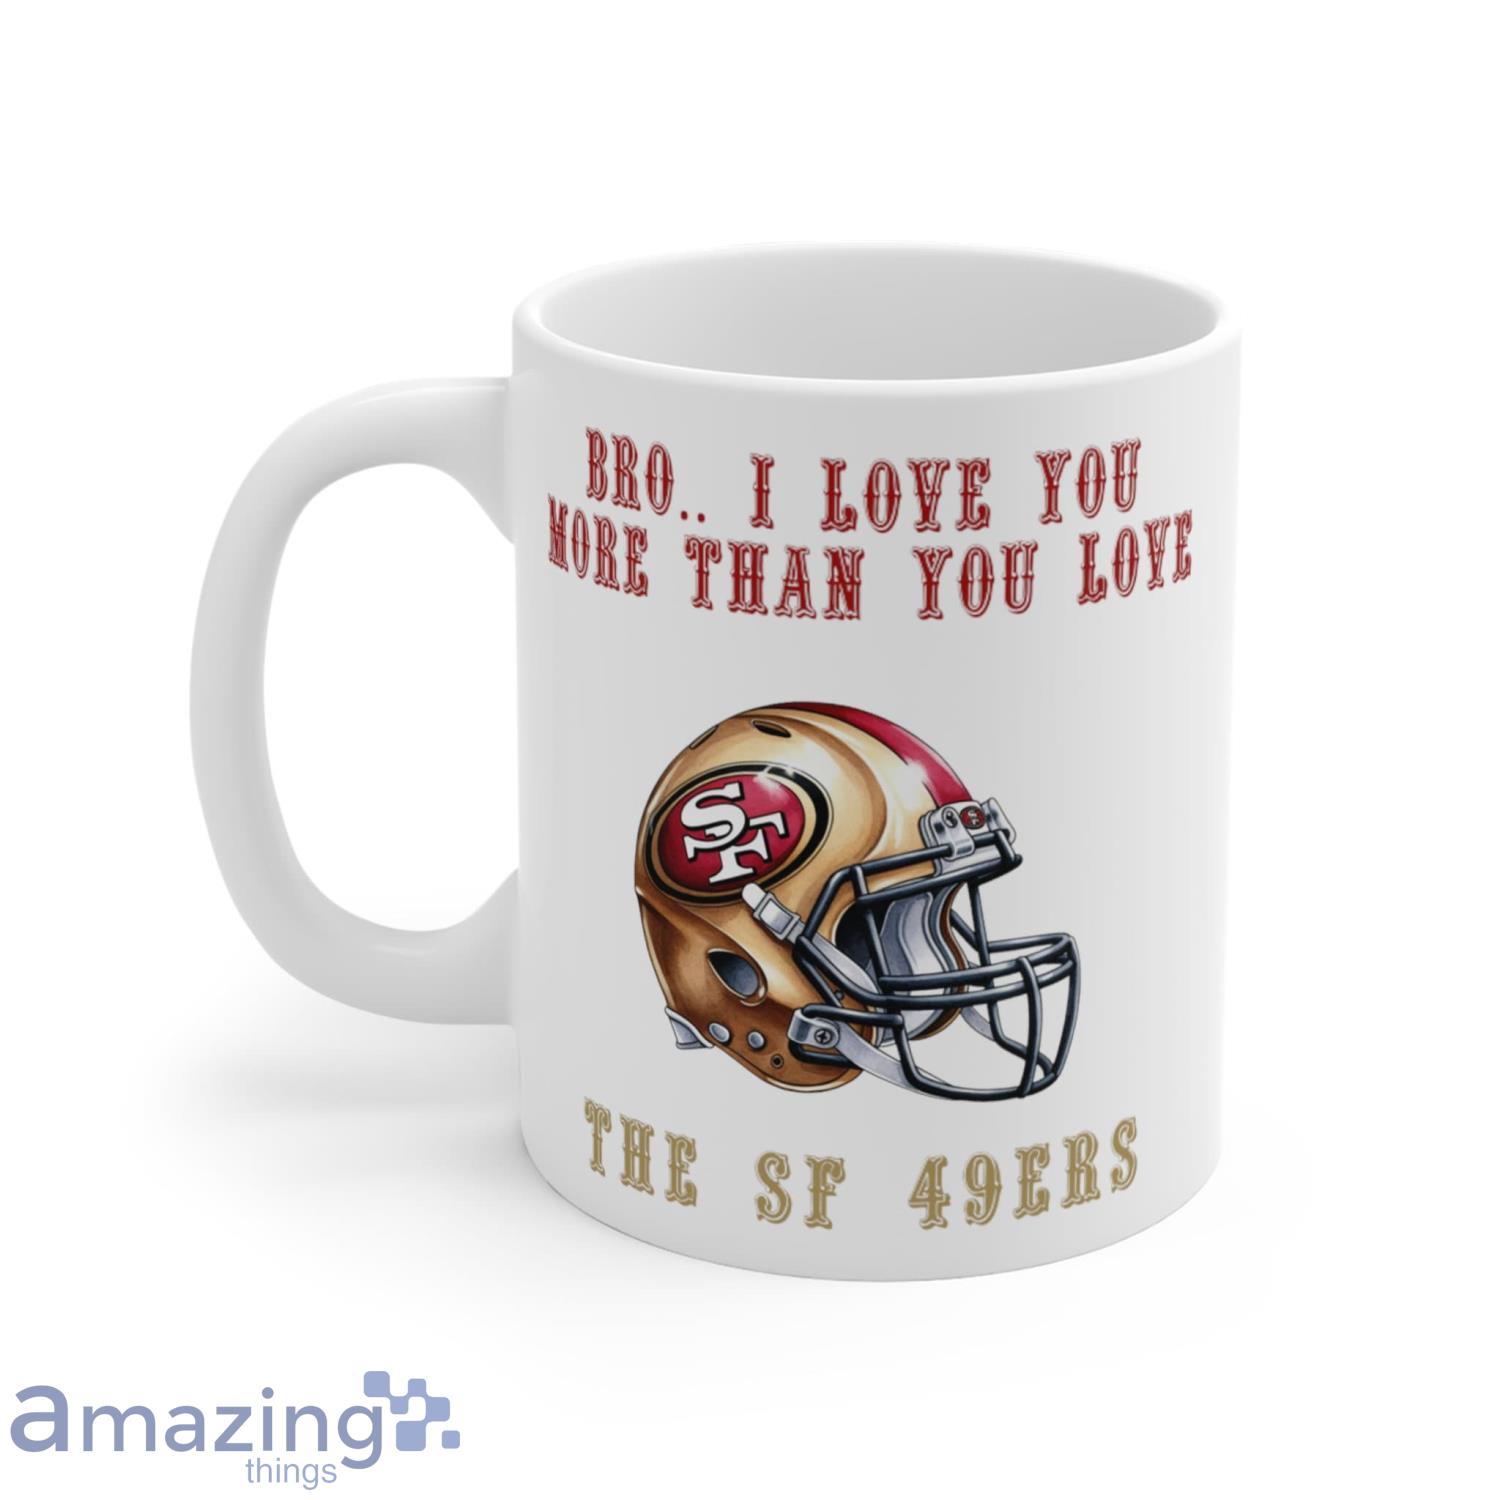 https://image.whatamazingthings.com/2023/07/bro-i-love-you-more-than-you-love-the-sf-49ers-fans-gift-coffee-mug-1.jpg